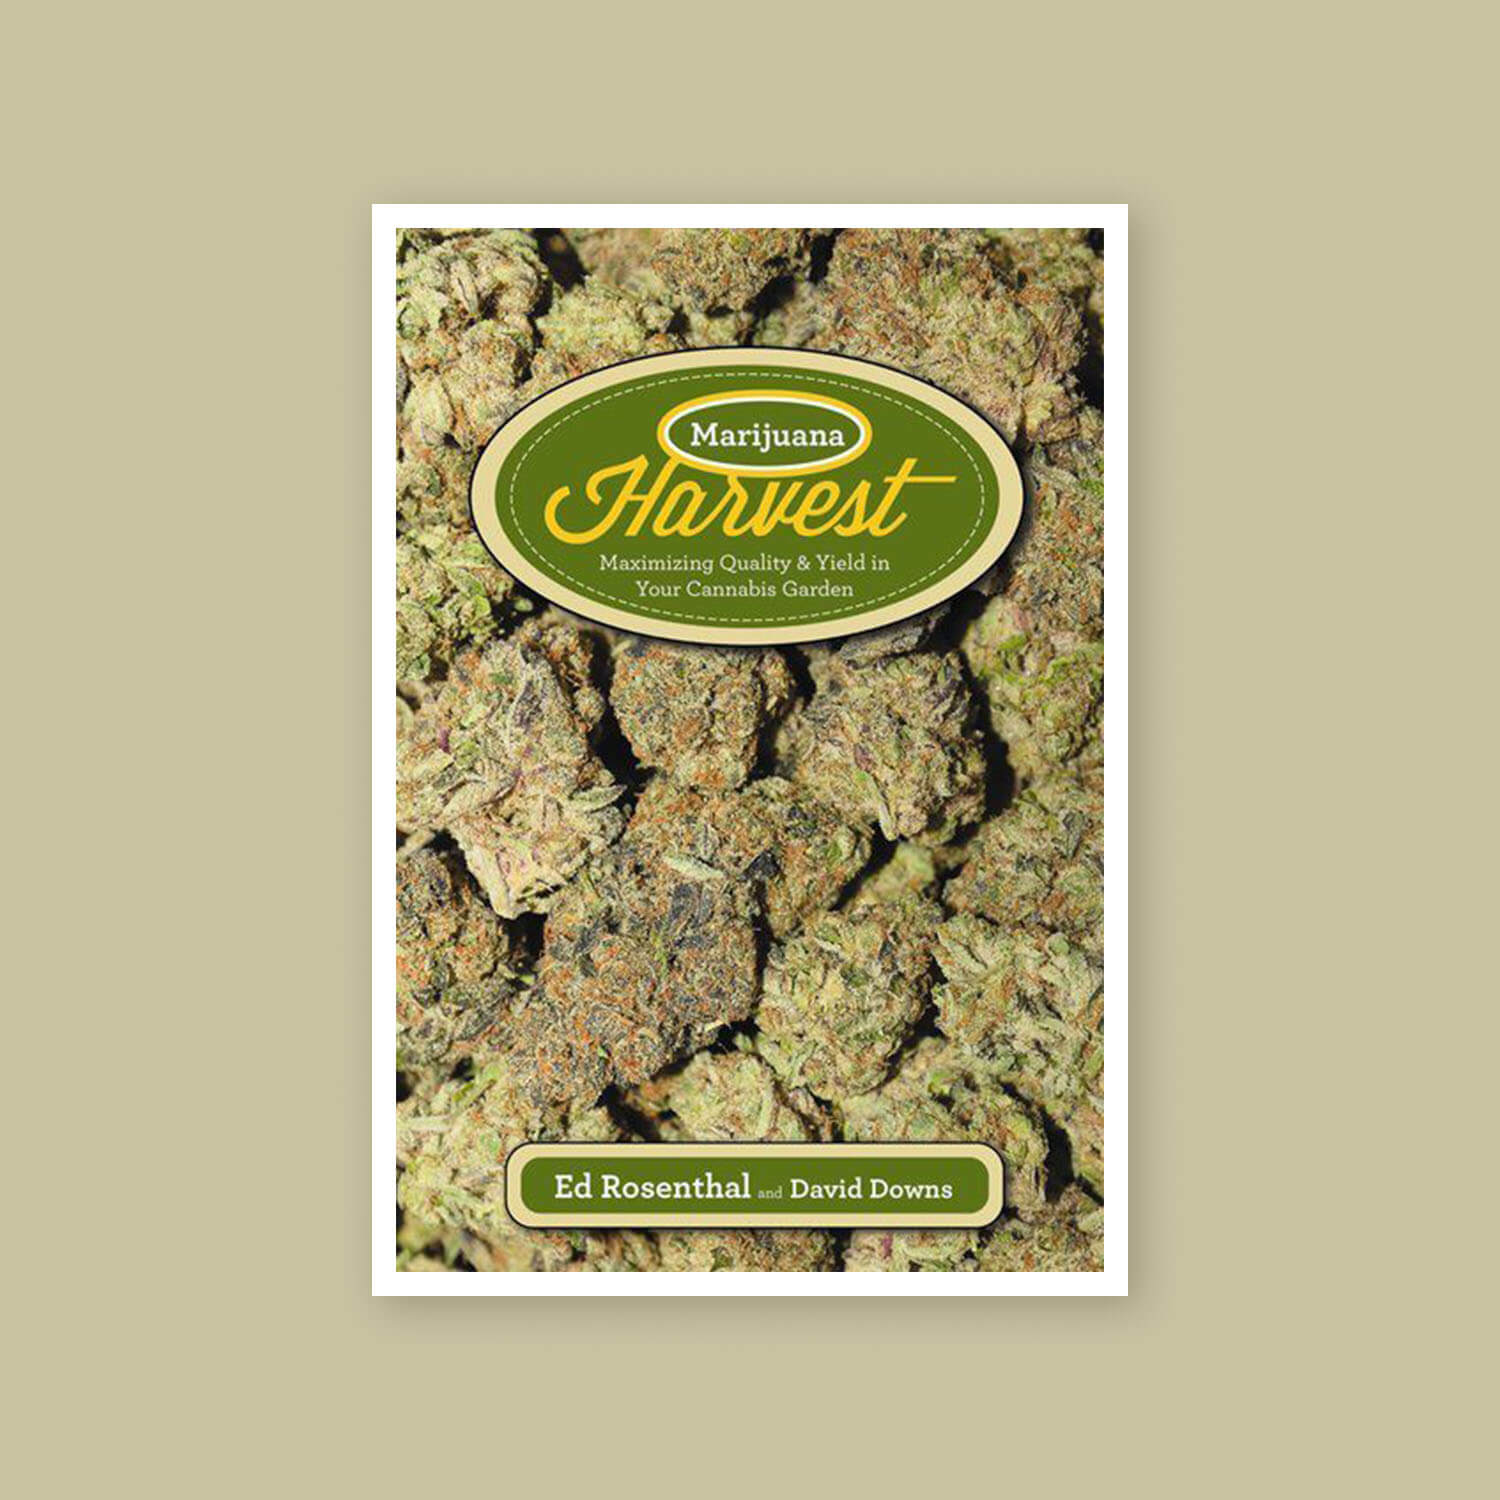 Marijuana harvest - Goldleaf bookshelf